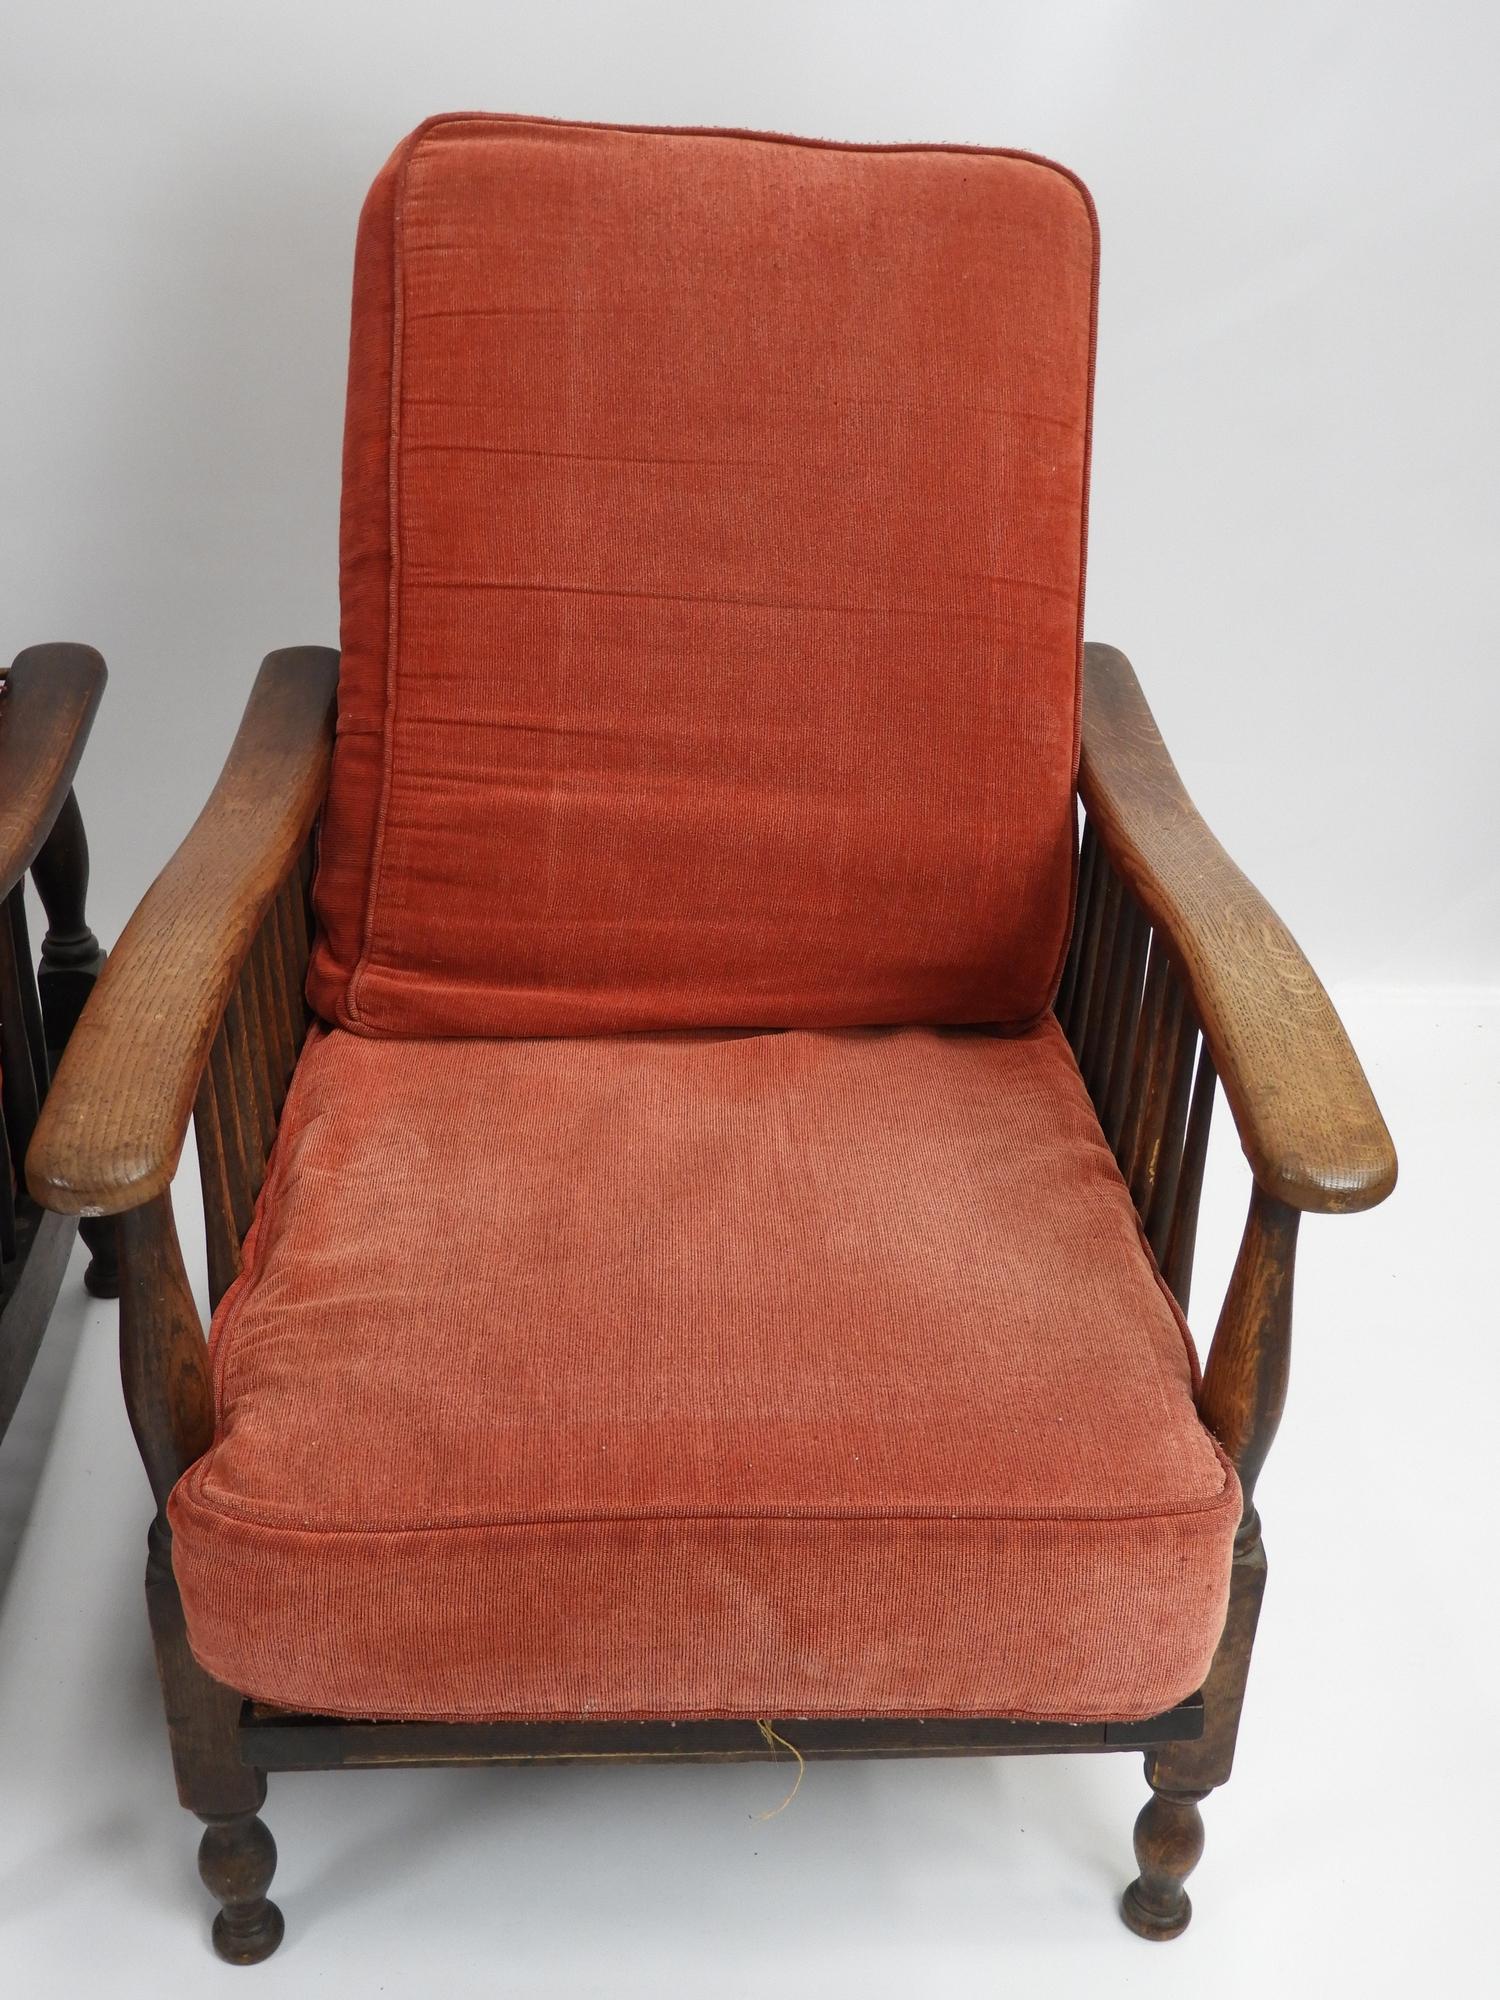 2x Oak Reclining Fireside Chairs - Image 3 of 5